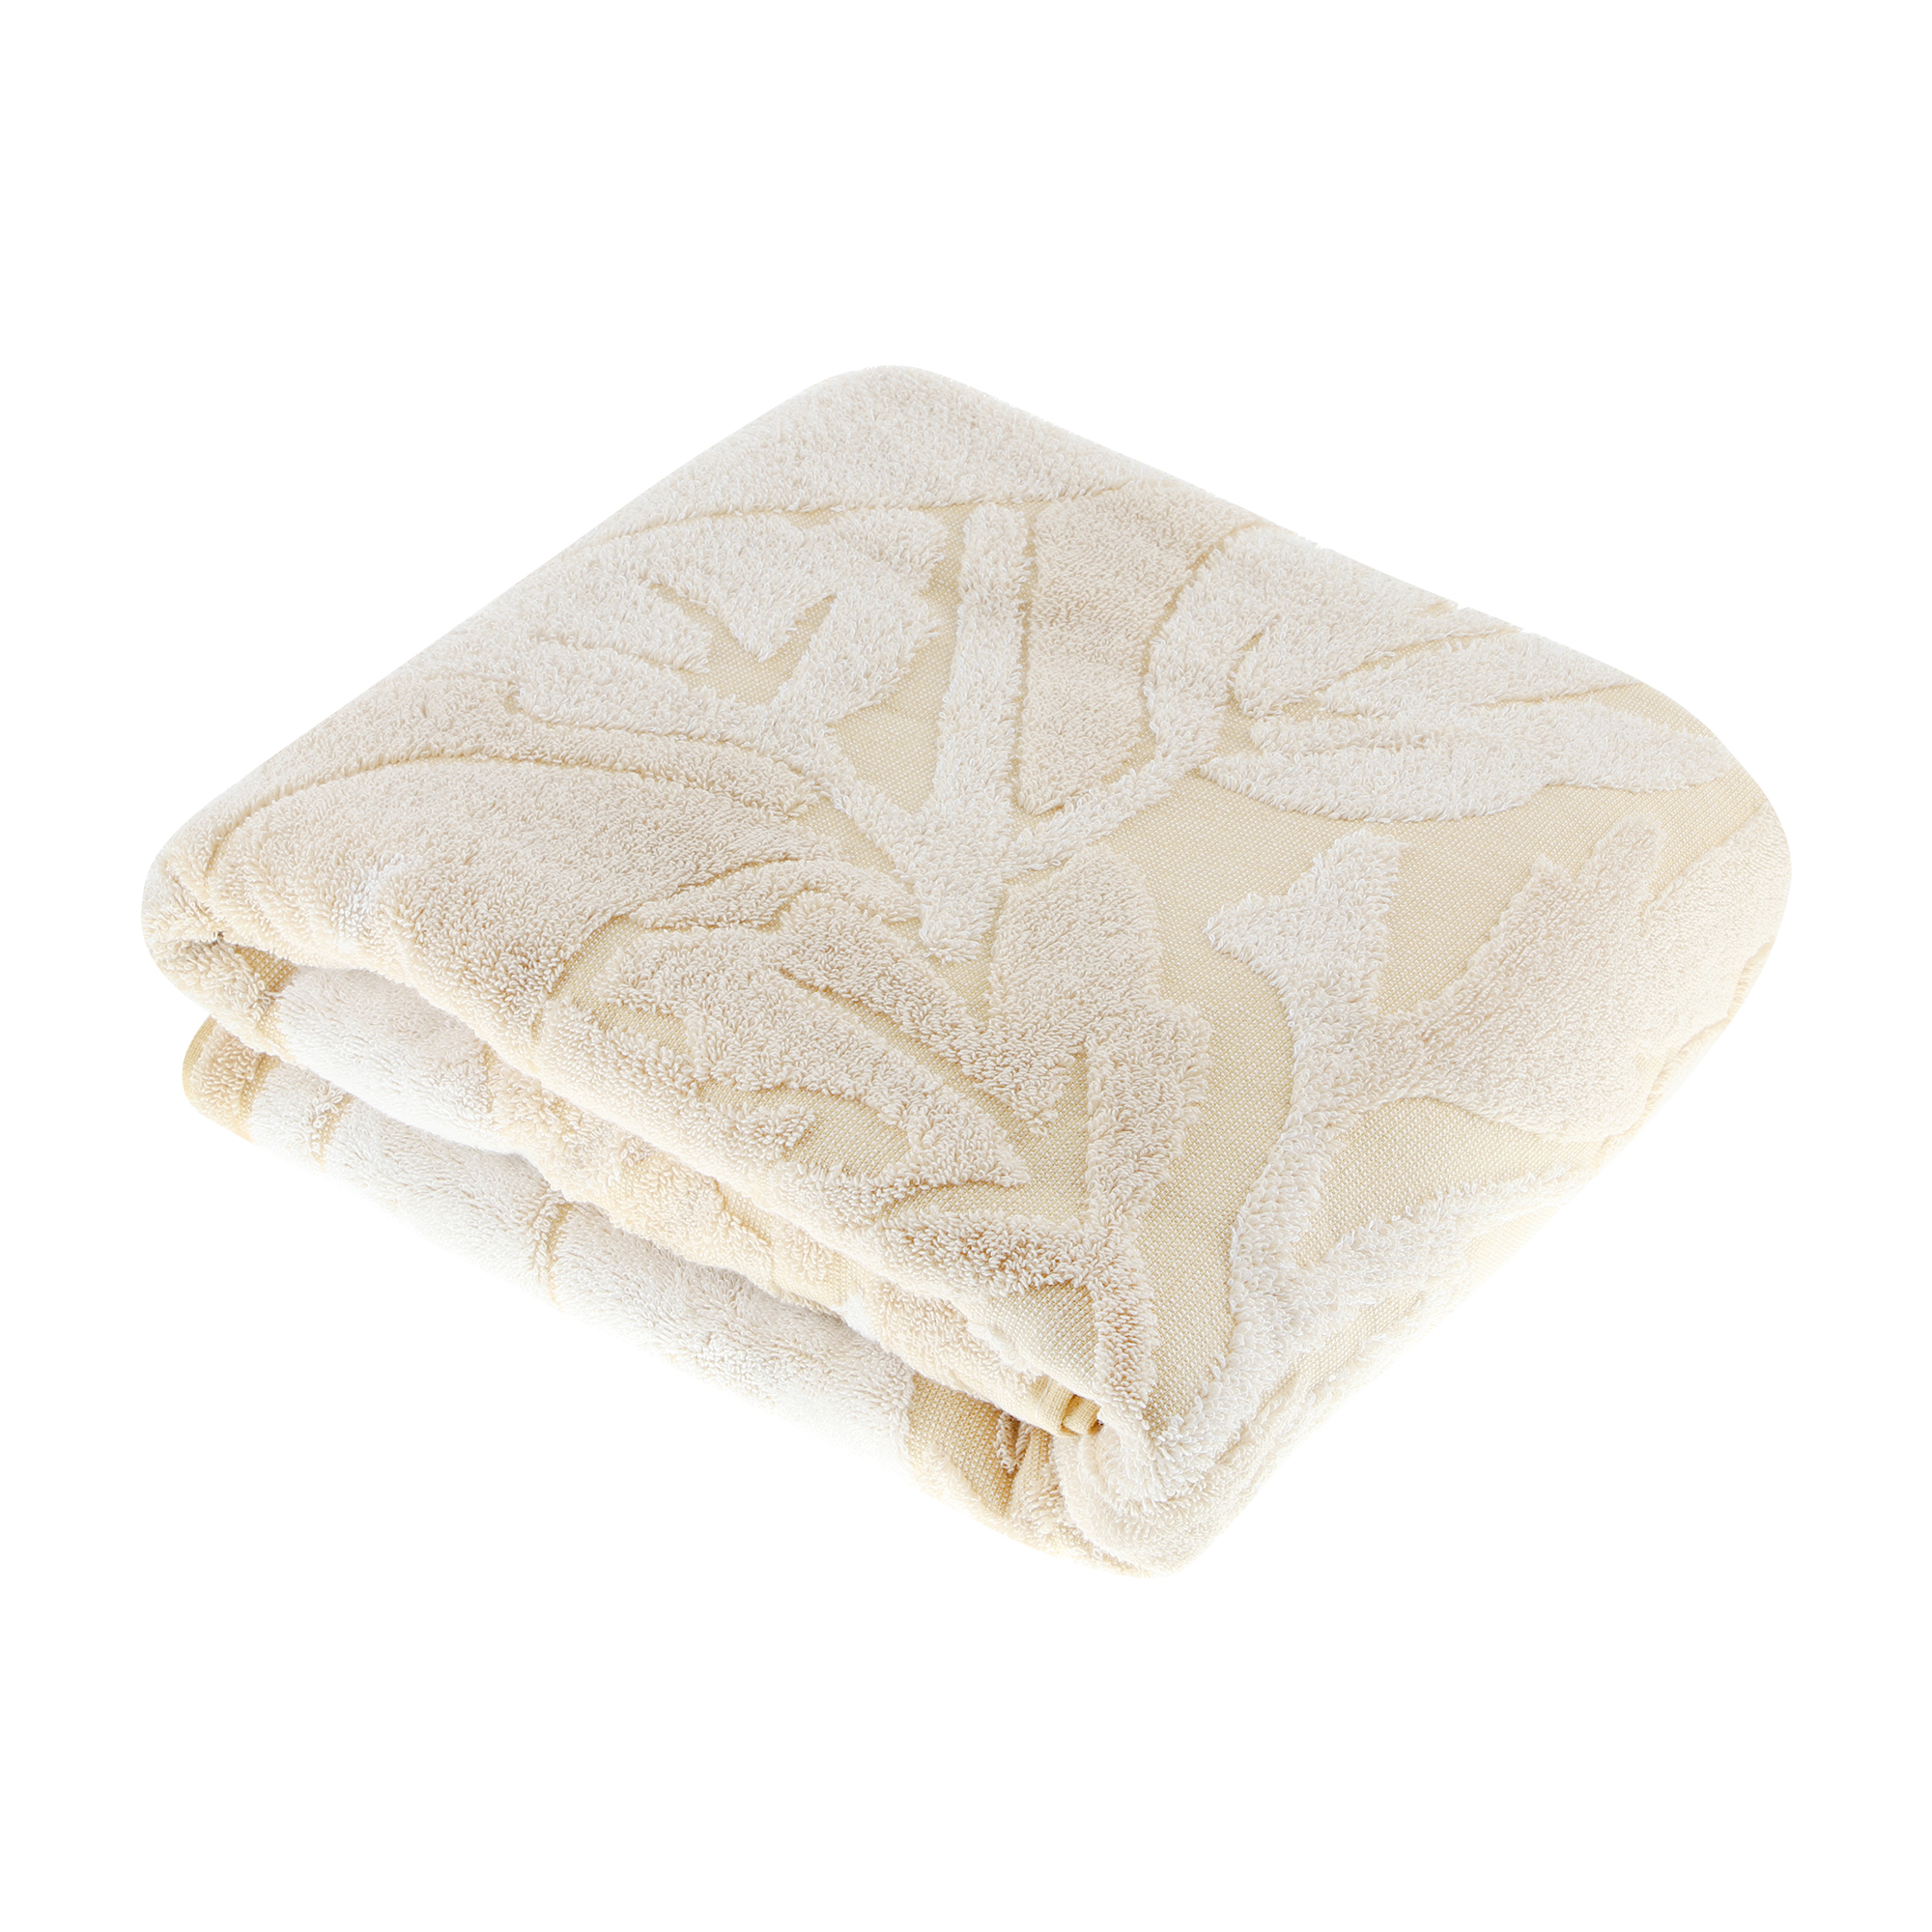 Полотенце махровое Cleanelly Форэста 100х150 бело-горчичное полотенце togas аркадия нежный коралл 100х150